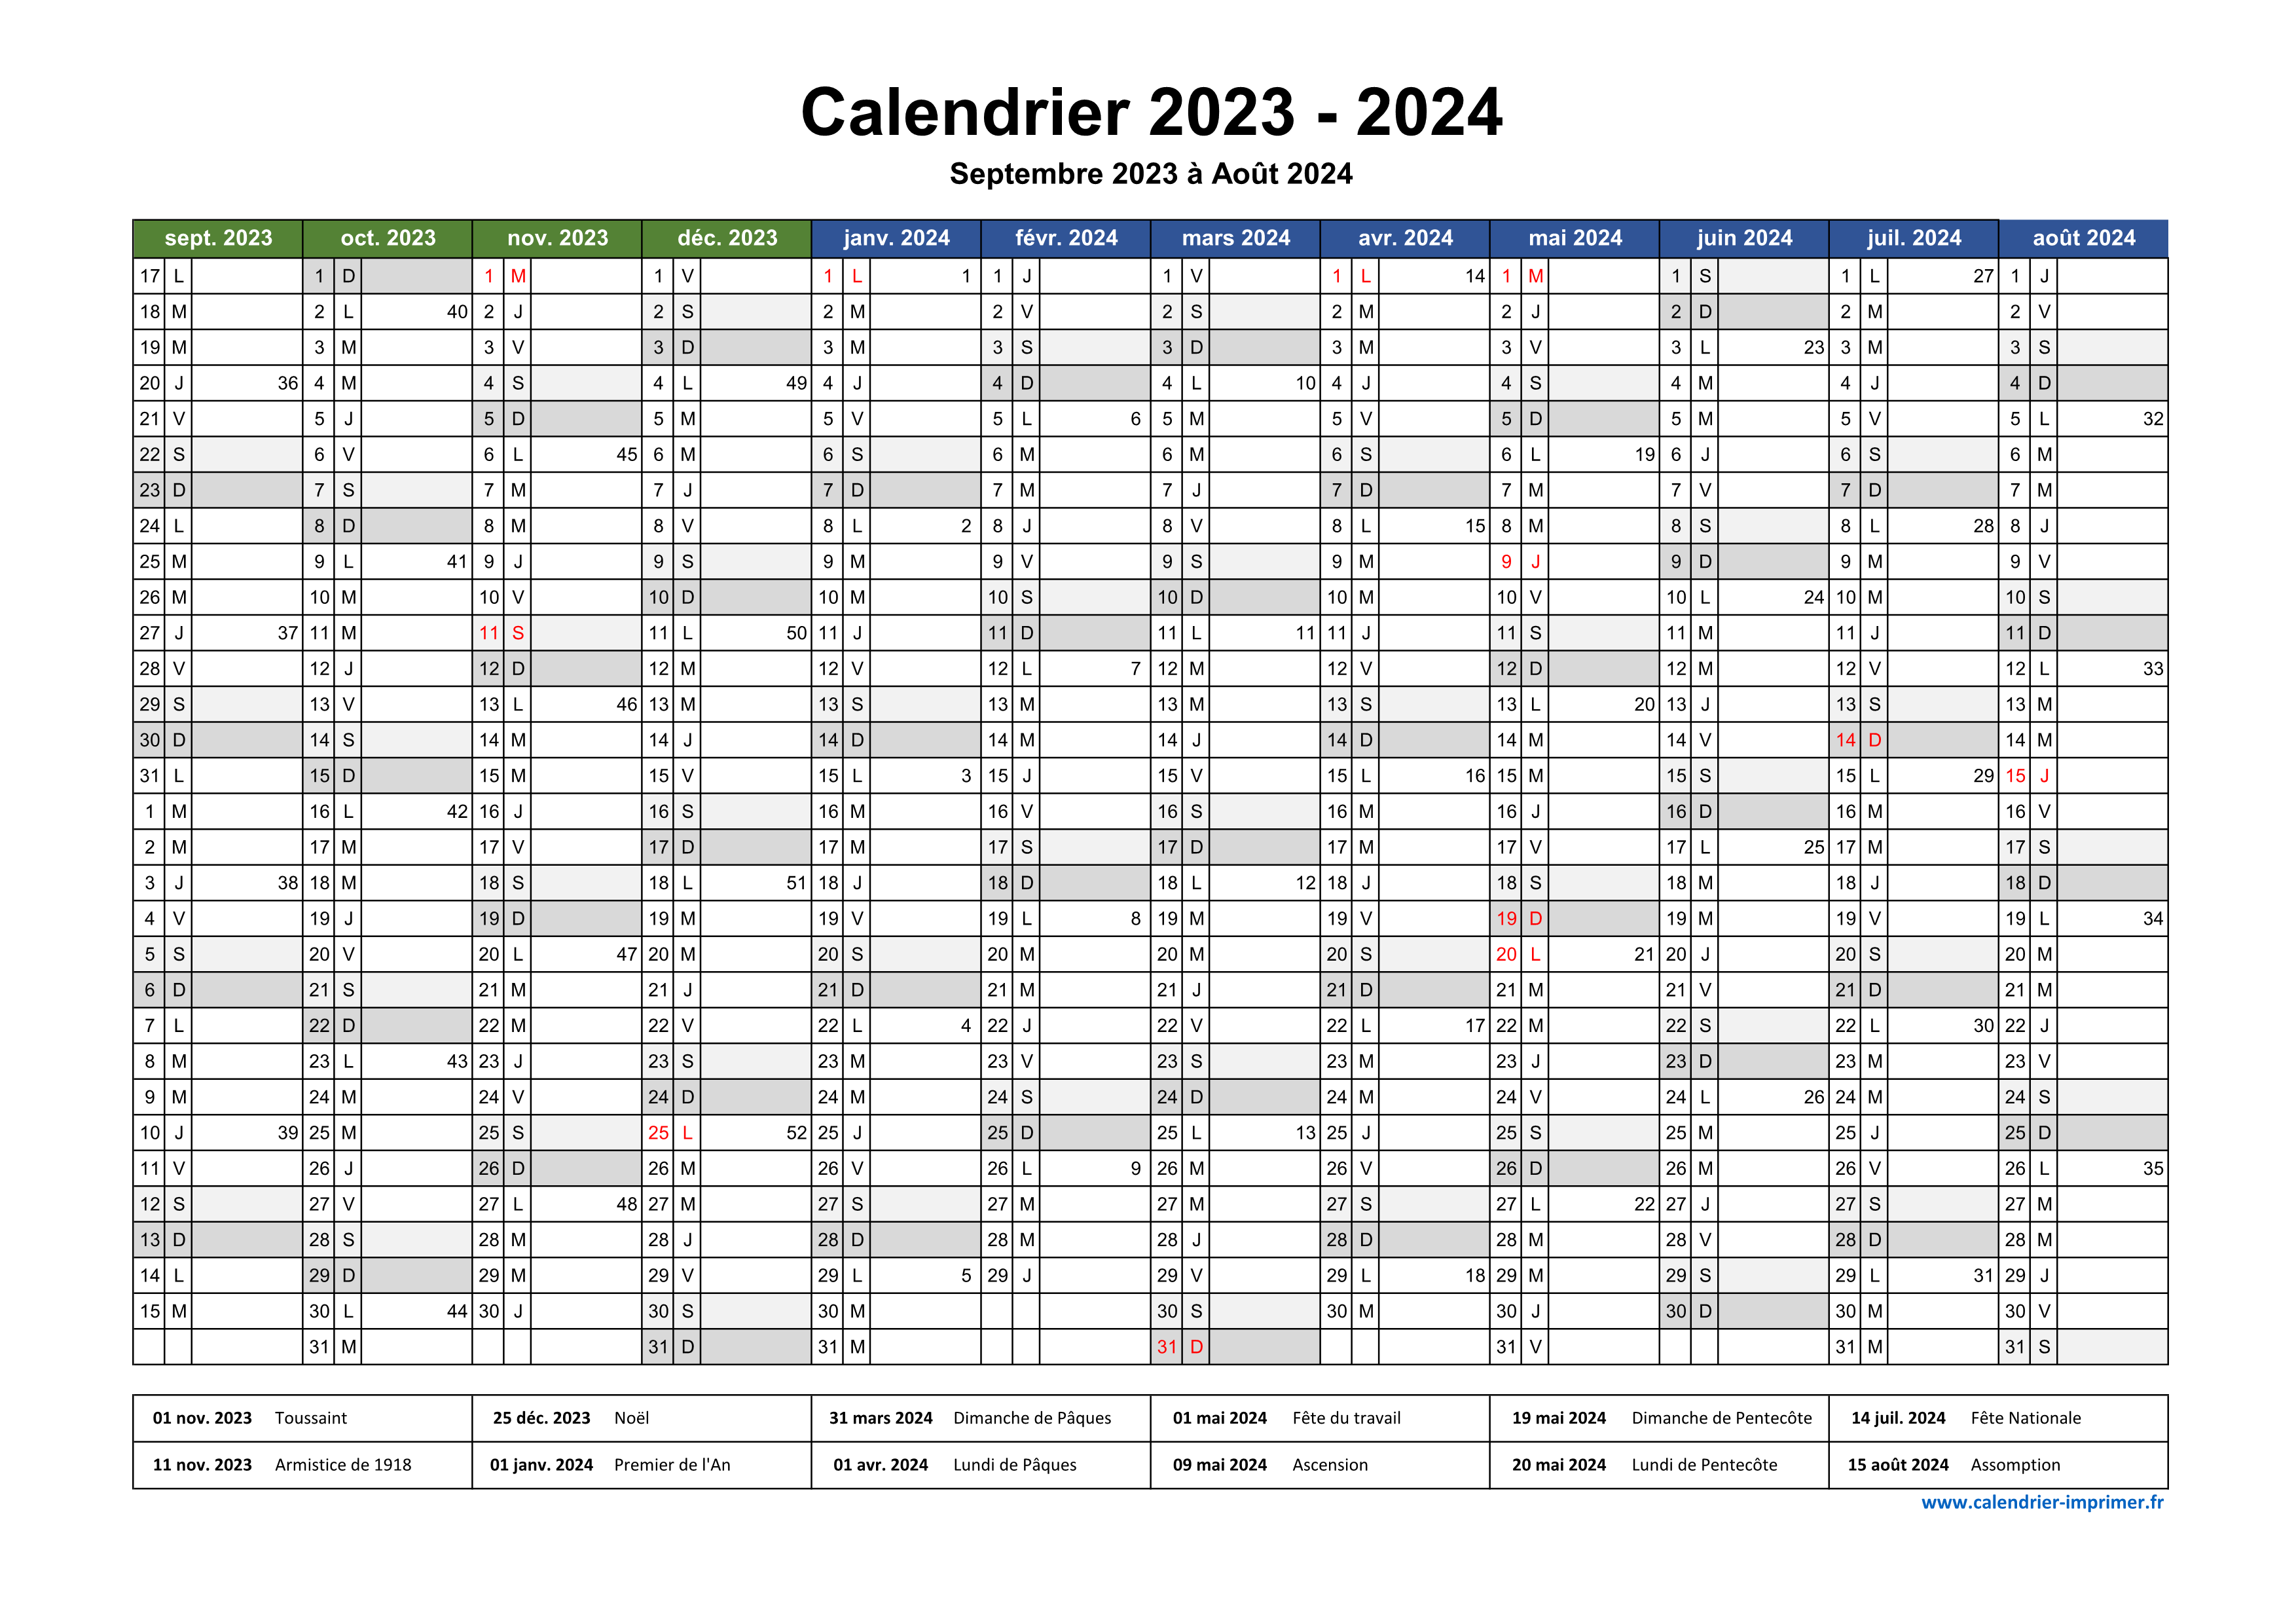 Calendrier mensuel 2023 2024 - latroussemaitresses